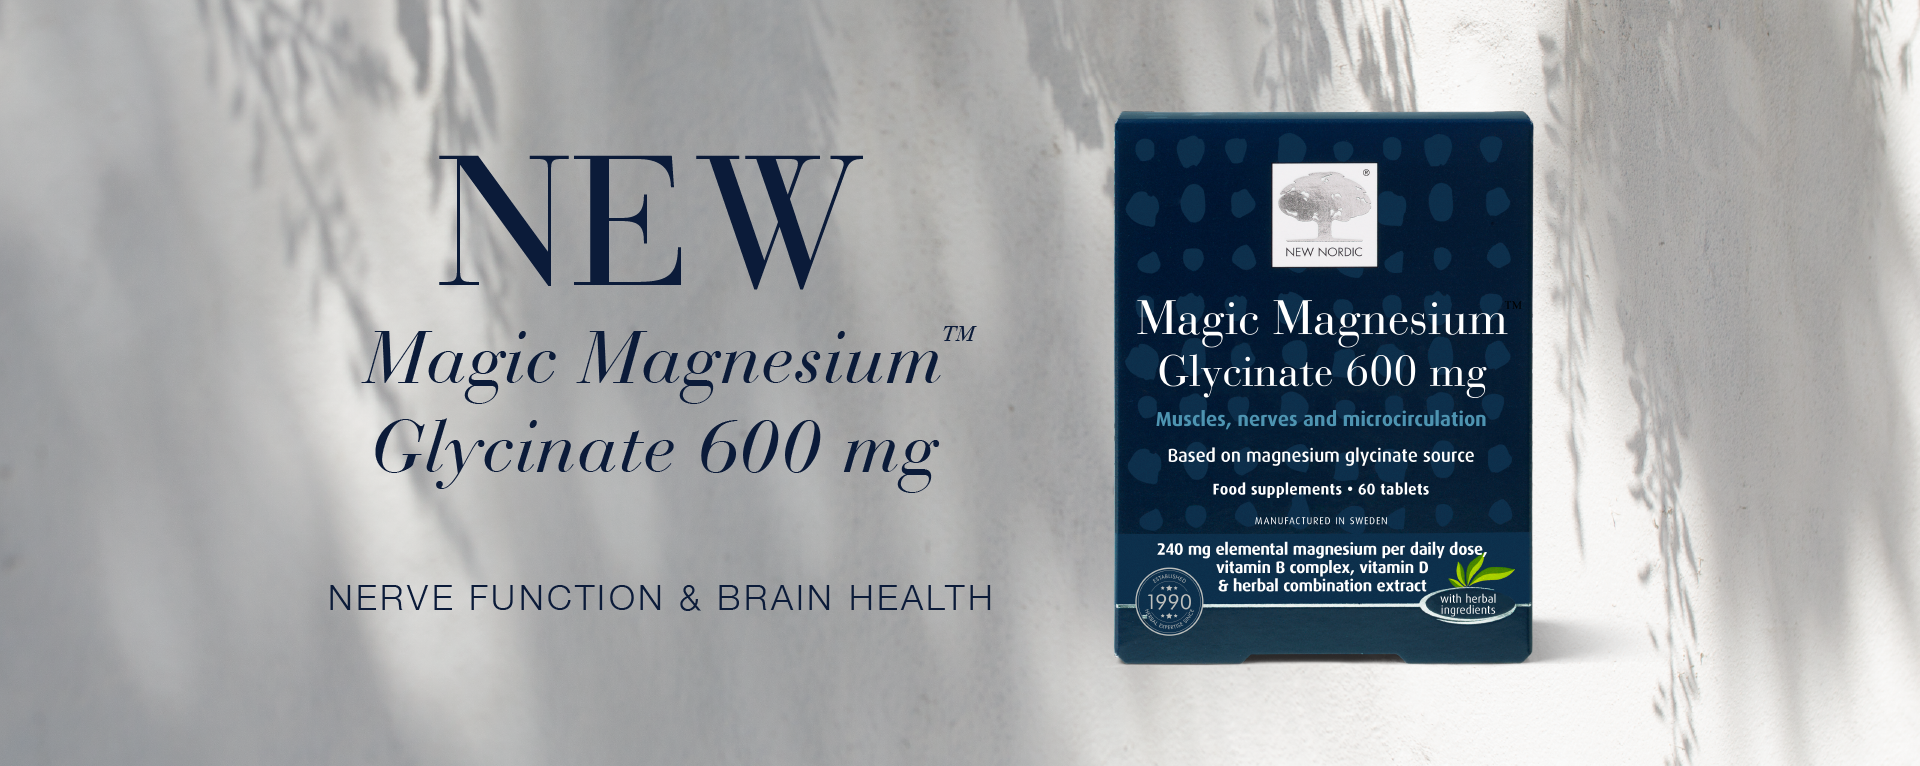 NEW Magic Magnesium™ Glycinate 600 mg